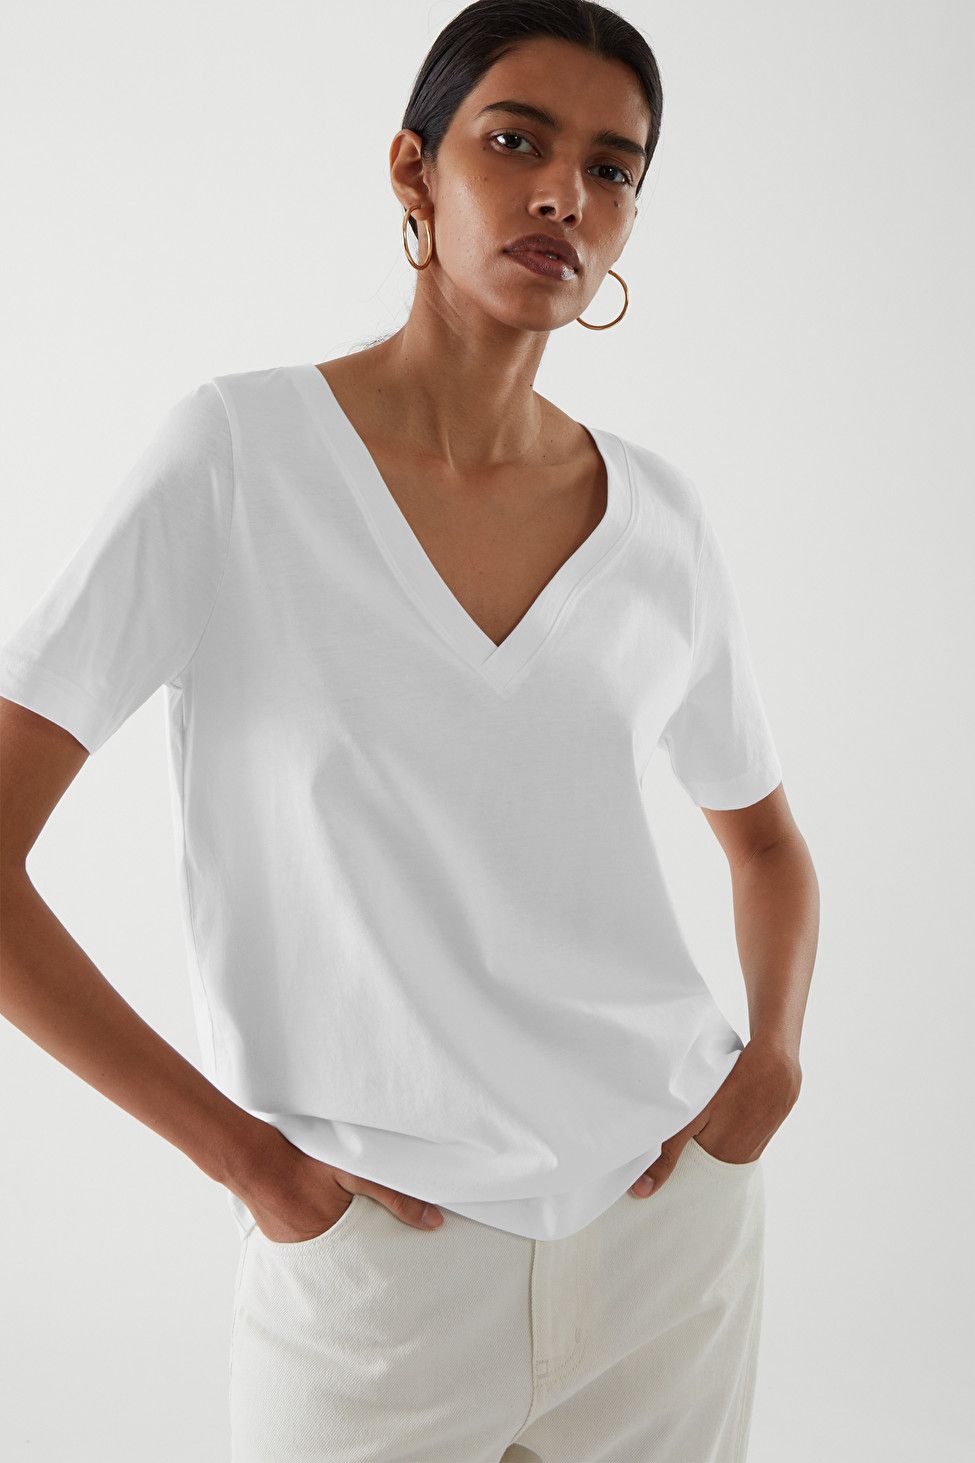 the best women's white t shirt